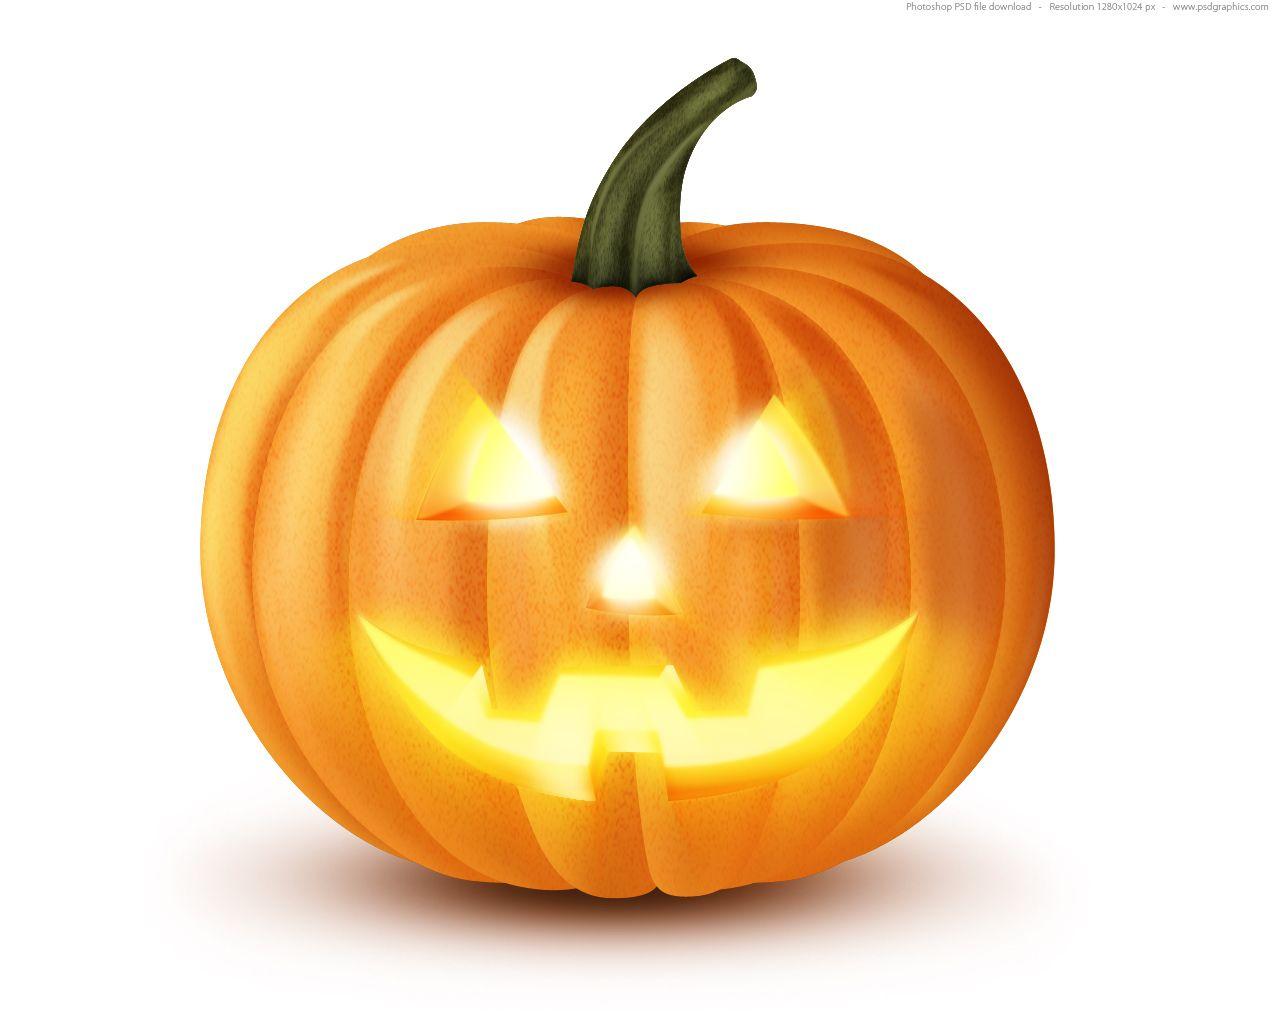 Jack O&; Lantern, Halloween pumpkin icon (PSD)